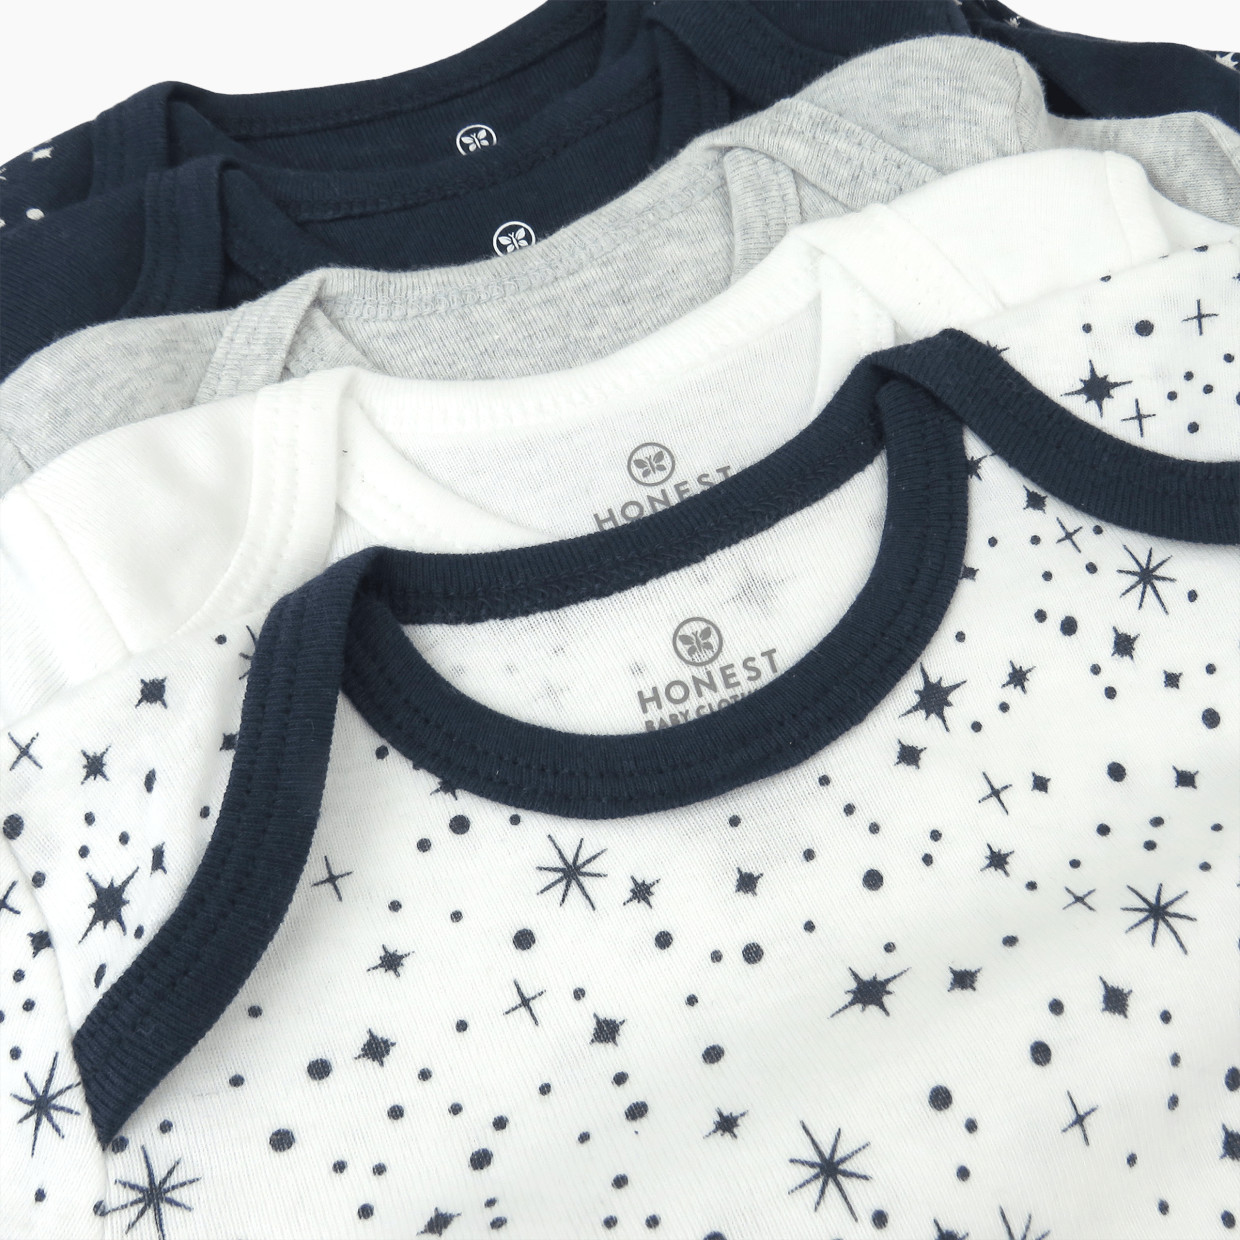 Honest Baby Clothing 5-Pack Organic Cotton Short Sleeve Bodysuit - Twinkle Star Navy, 3-6 M, 5.